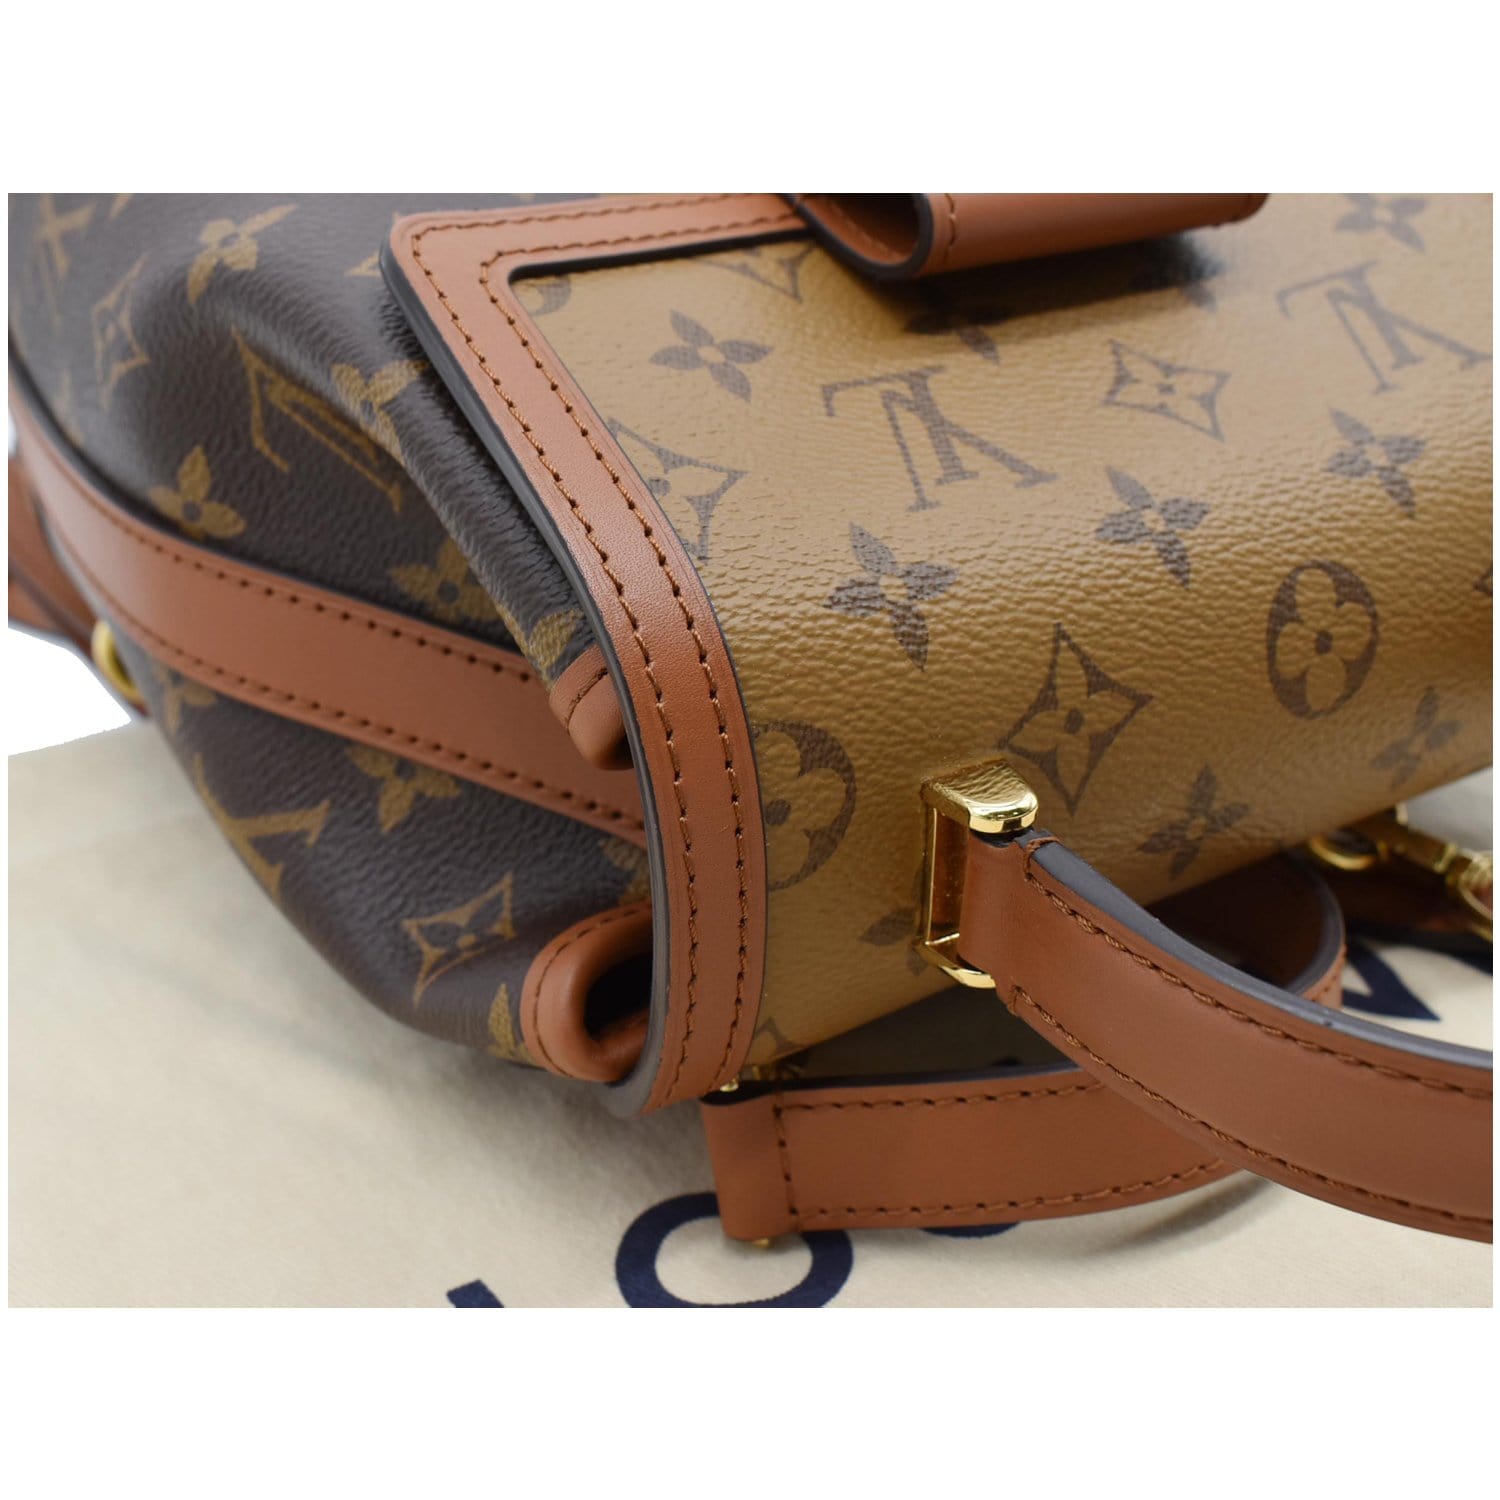 Louis Vuitton Dauphine Backpack Monogram #44393 – TasBatam168